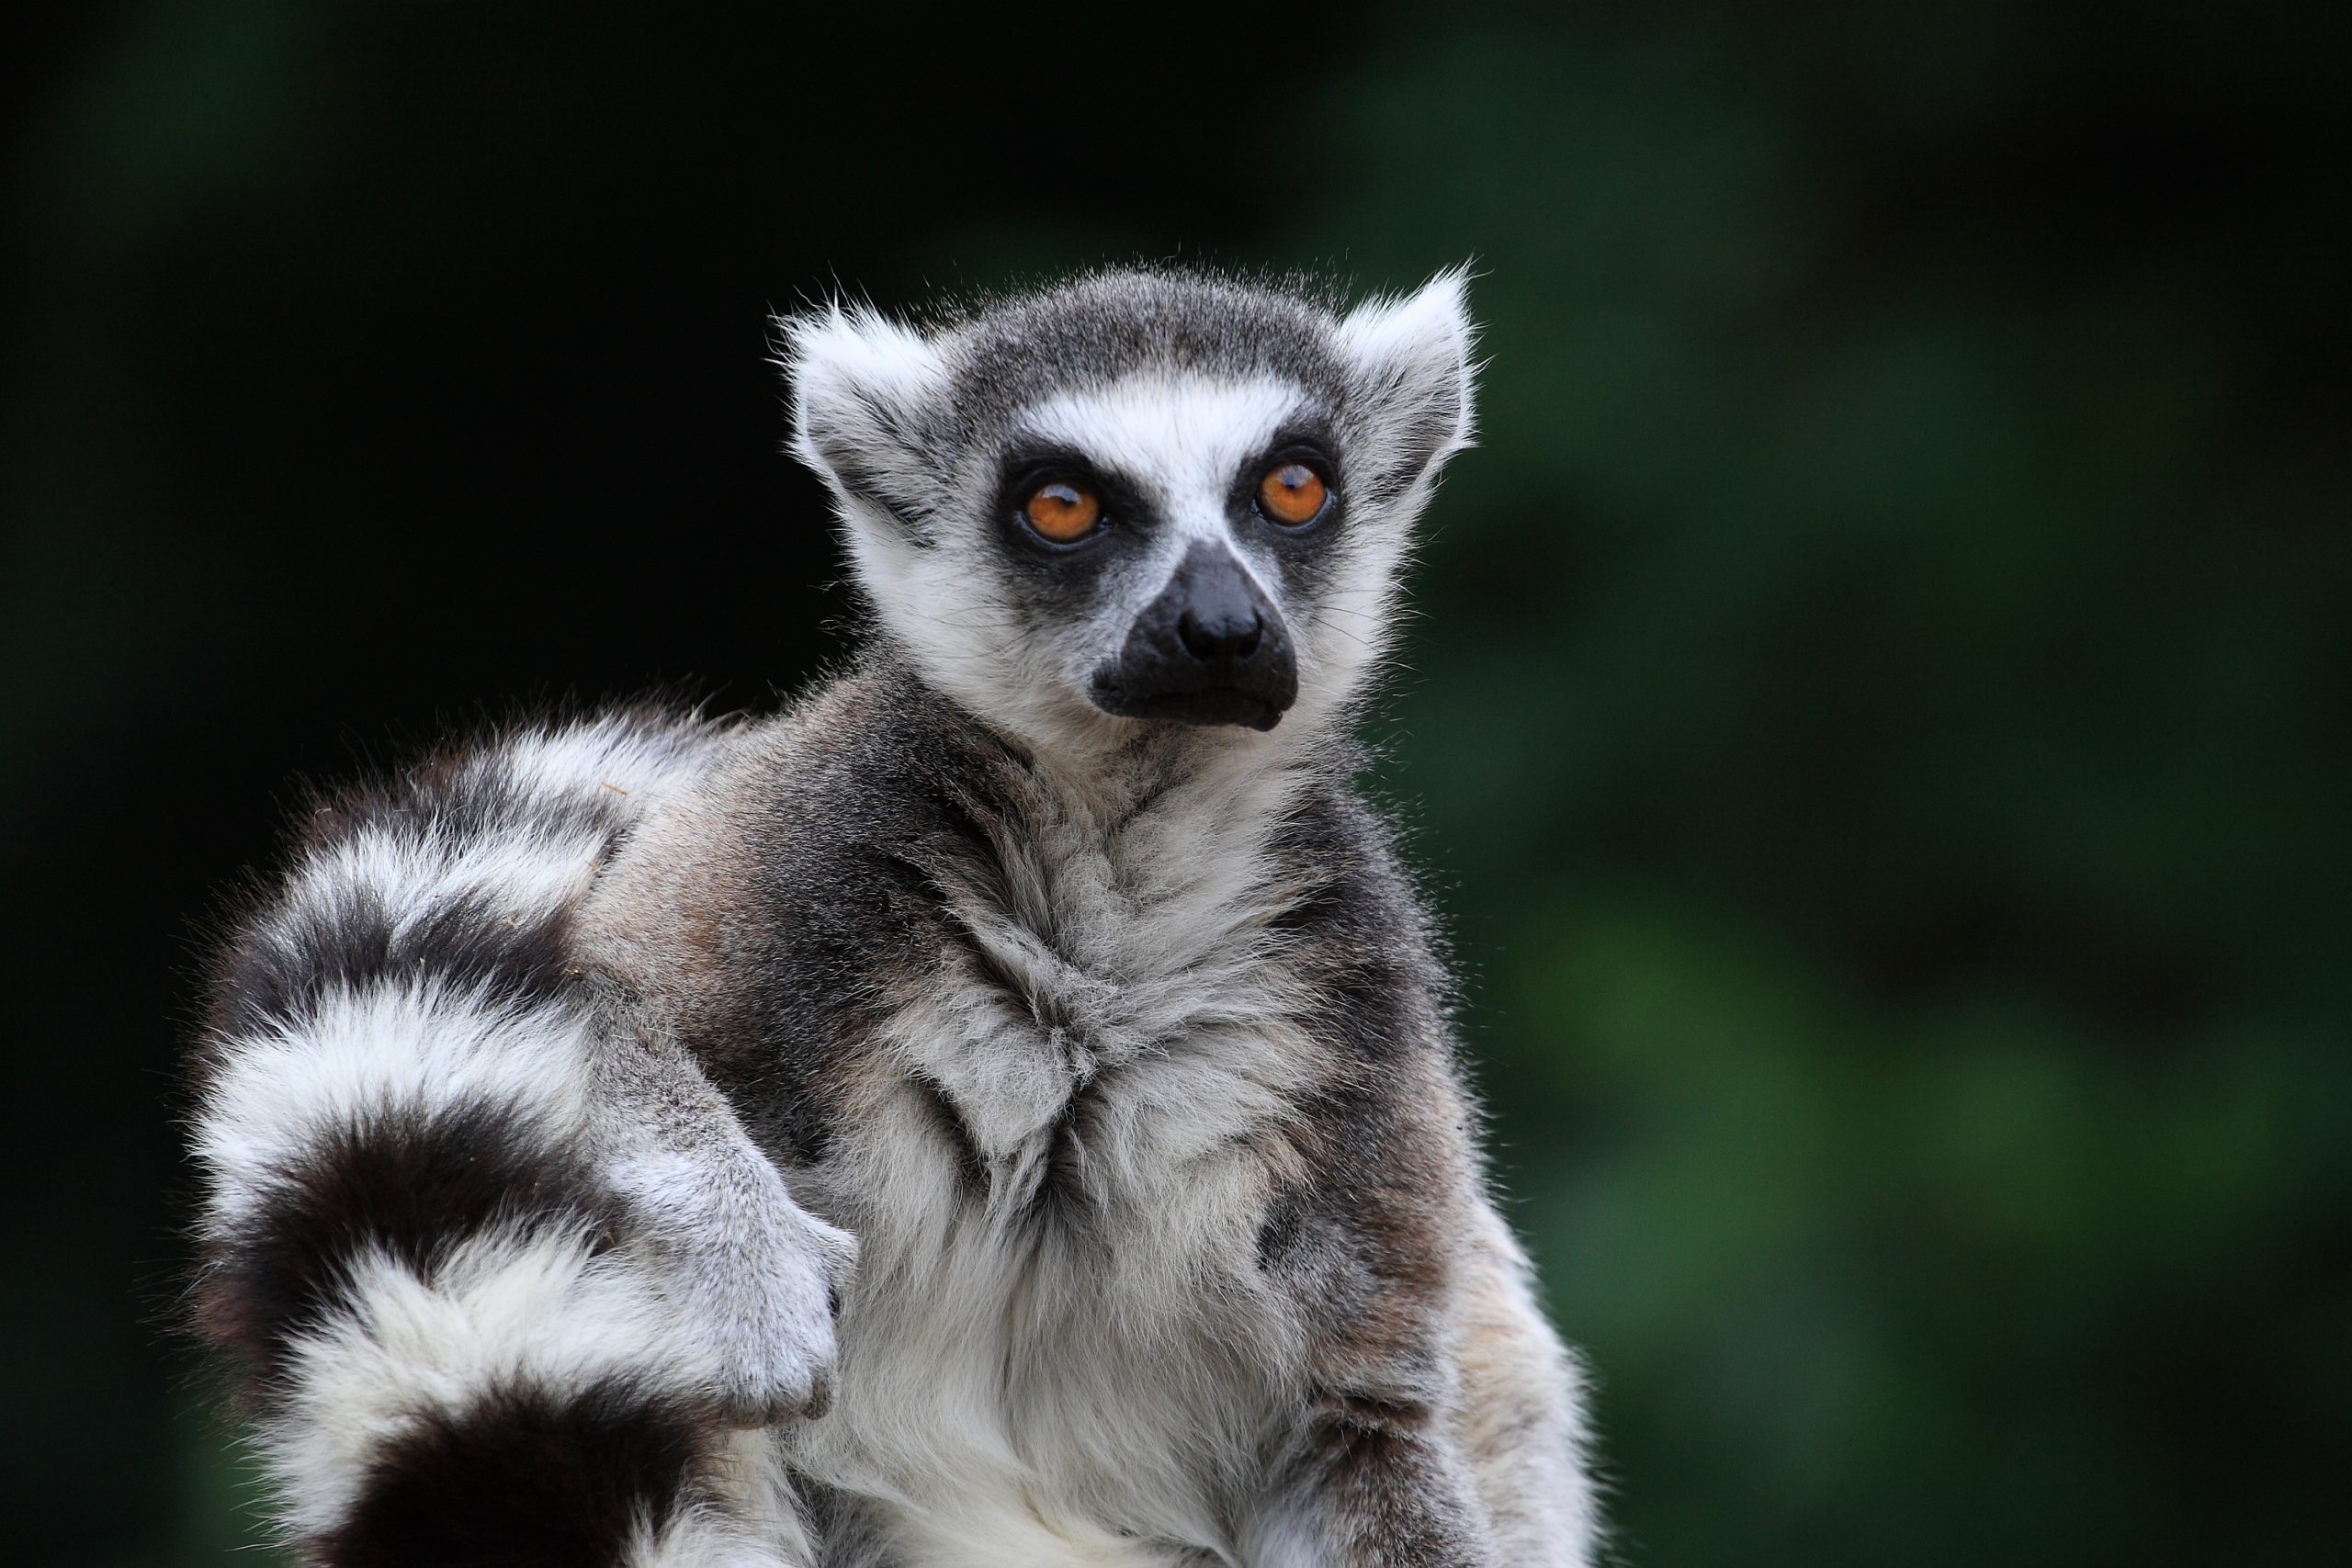 Madagascar Lemurs at Risk - Earth Day